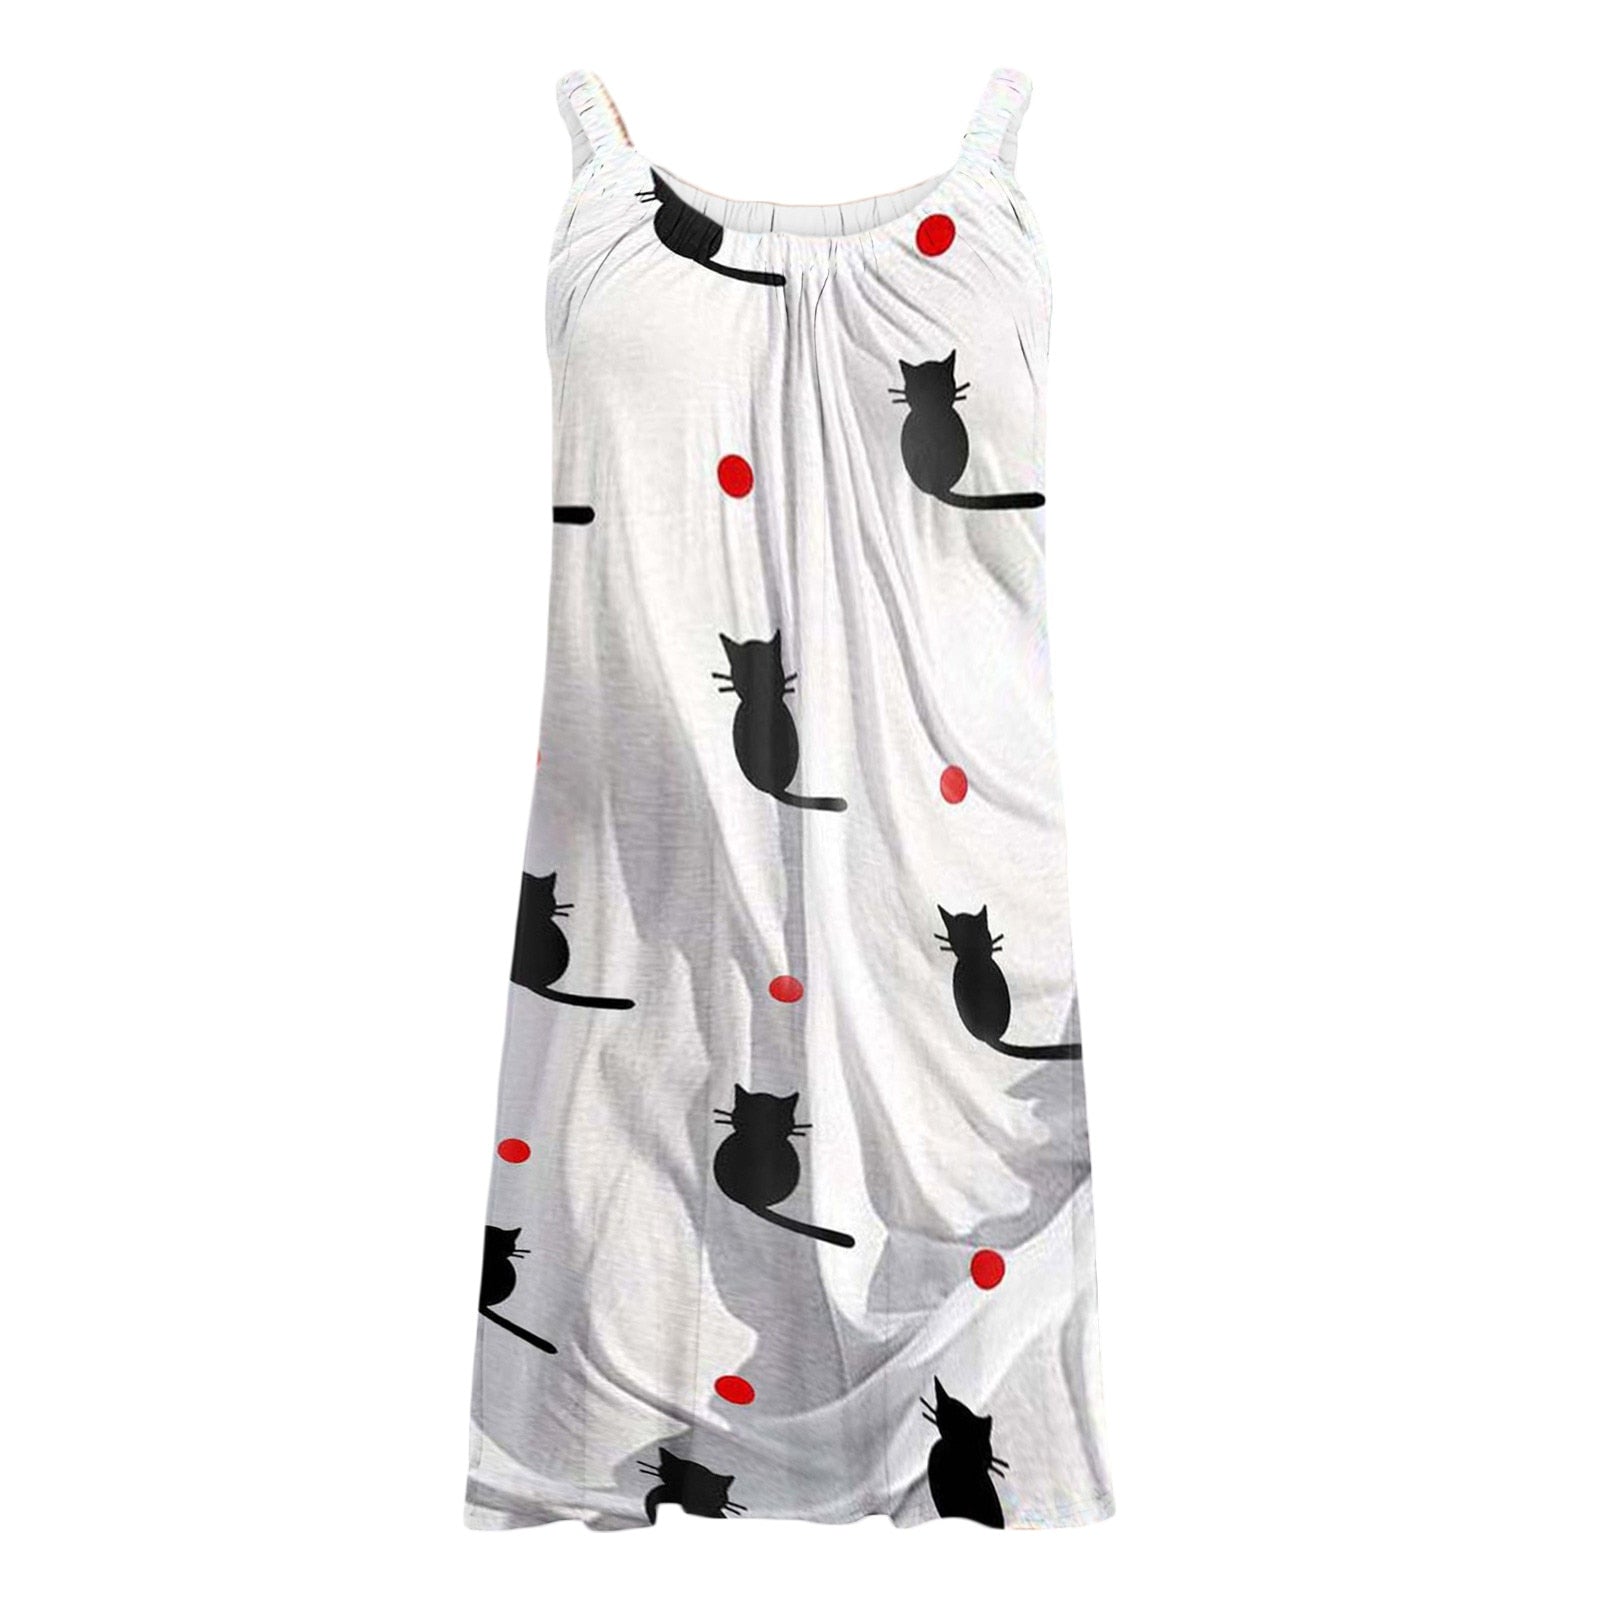 dress, cat dress, women cat dress Dress White and Black Cat